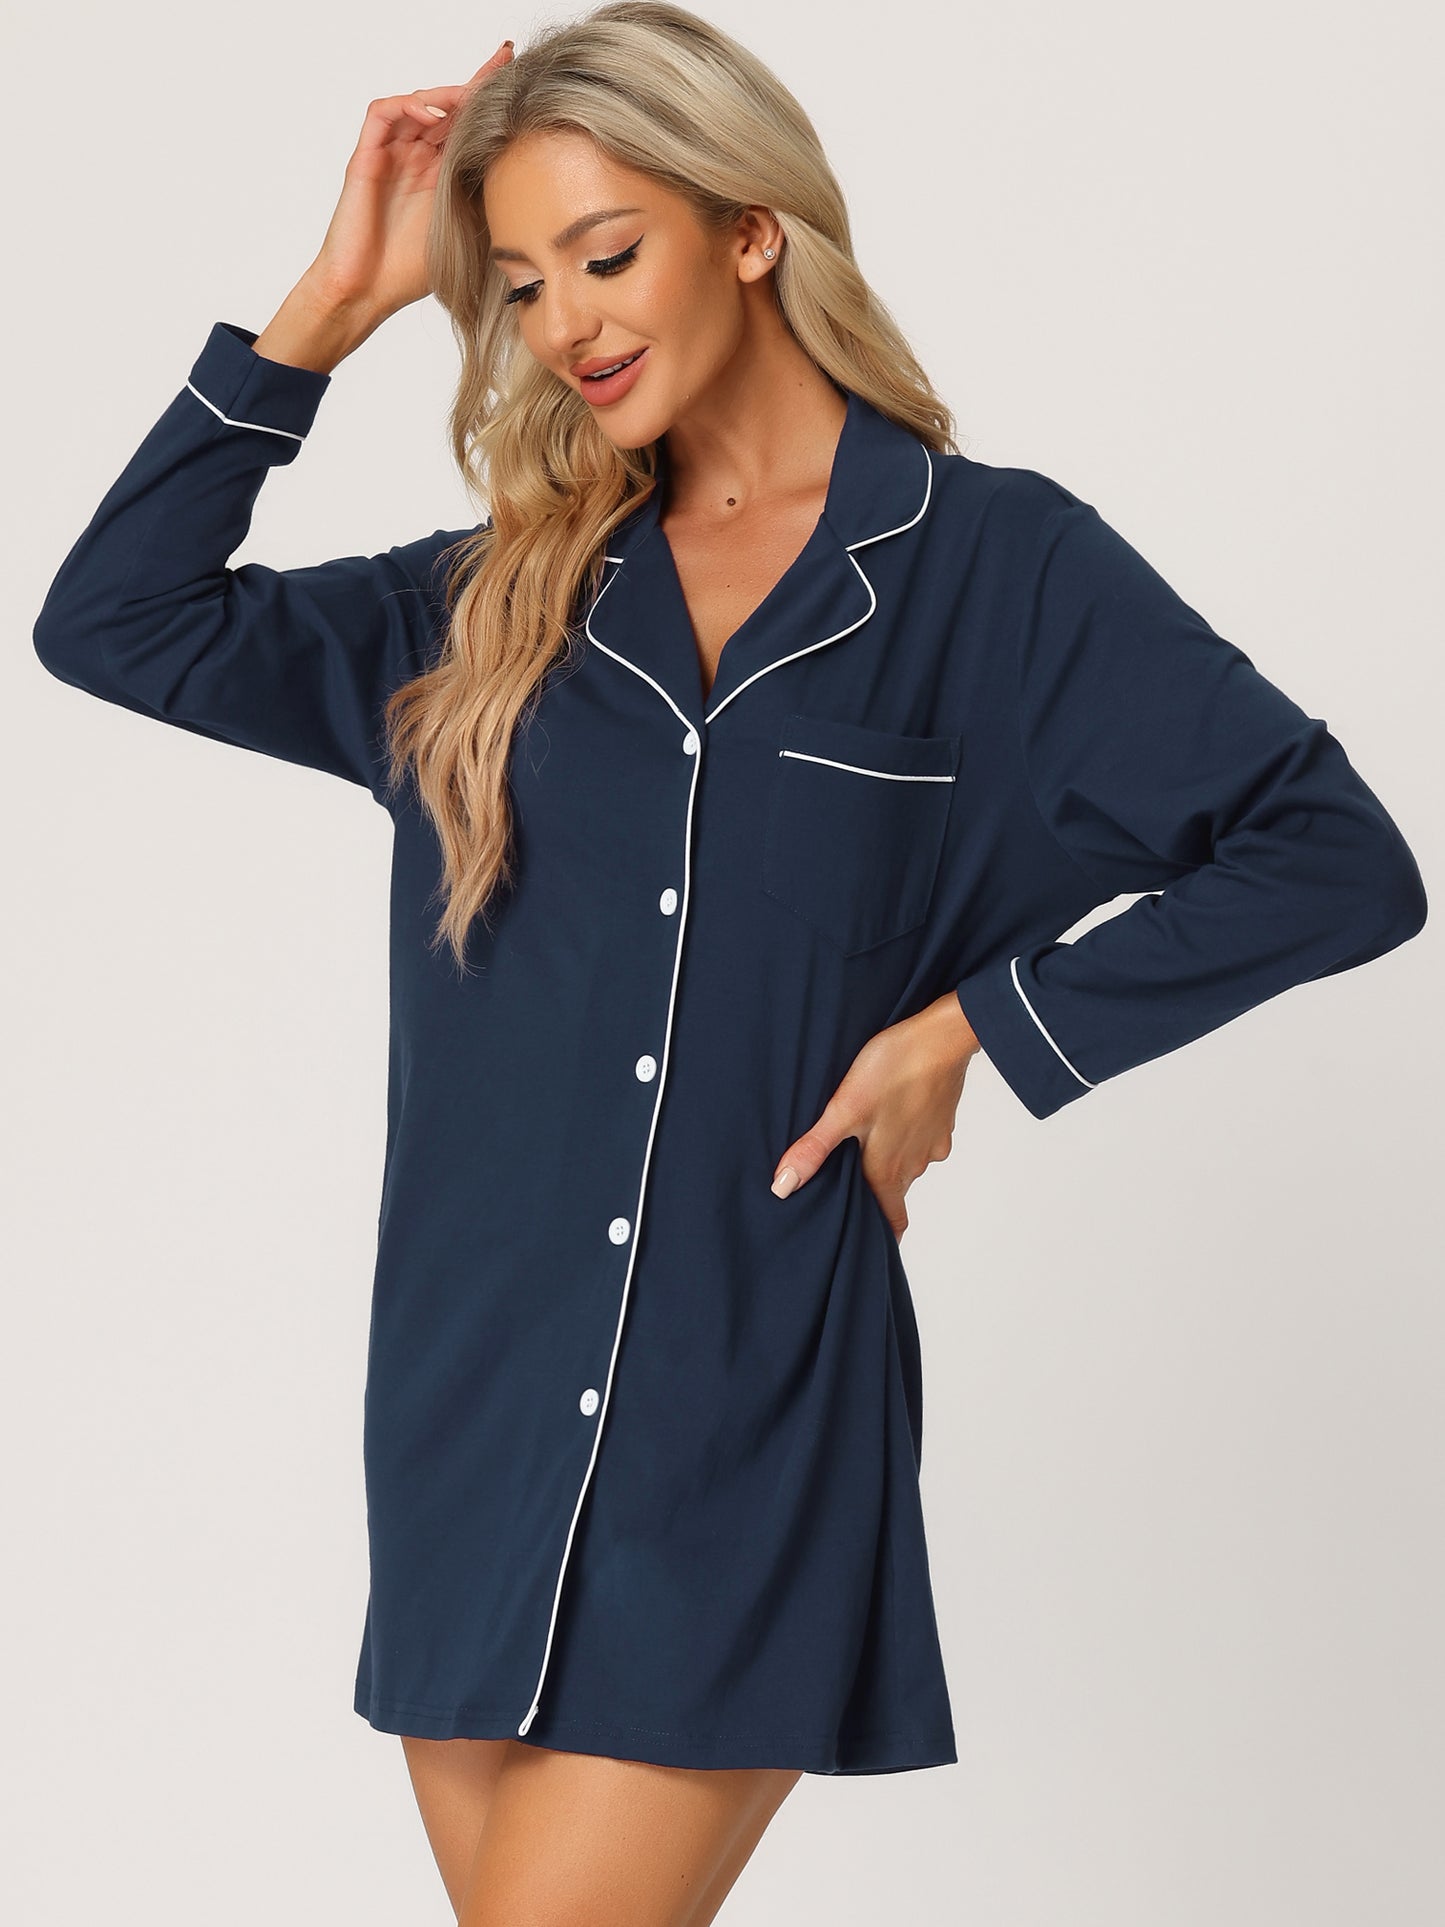 cheibear Pajamas Nightshirt Short Sleeves Button Down Shirt Dress Navy Blue